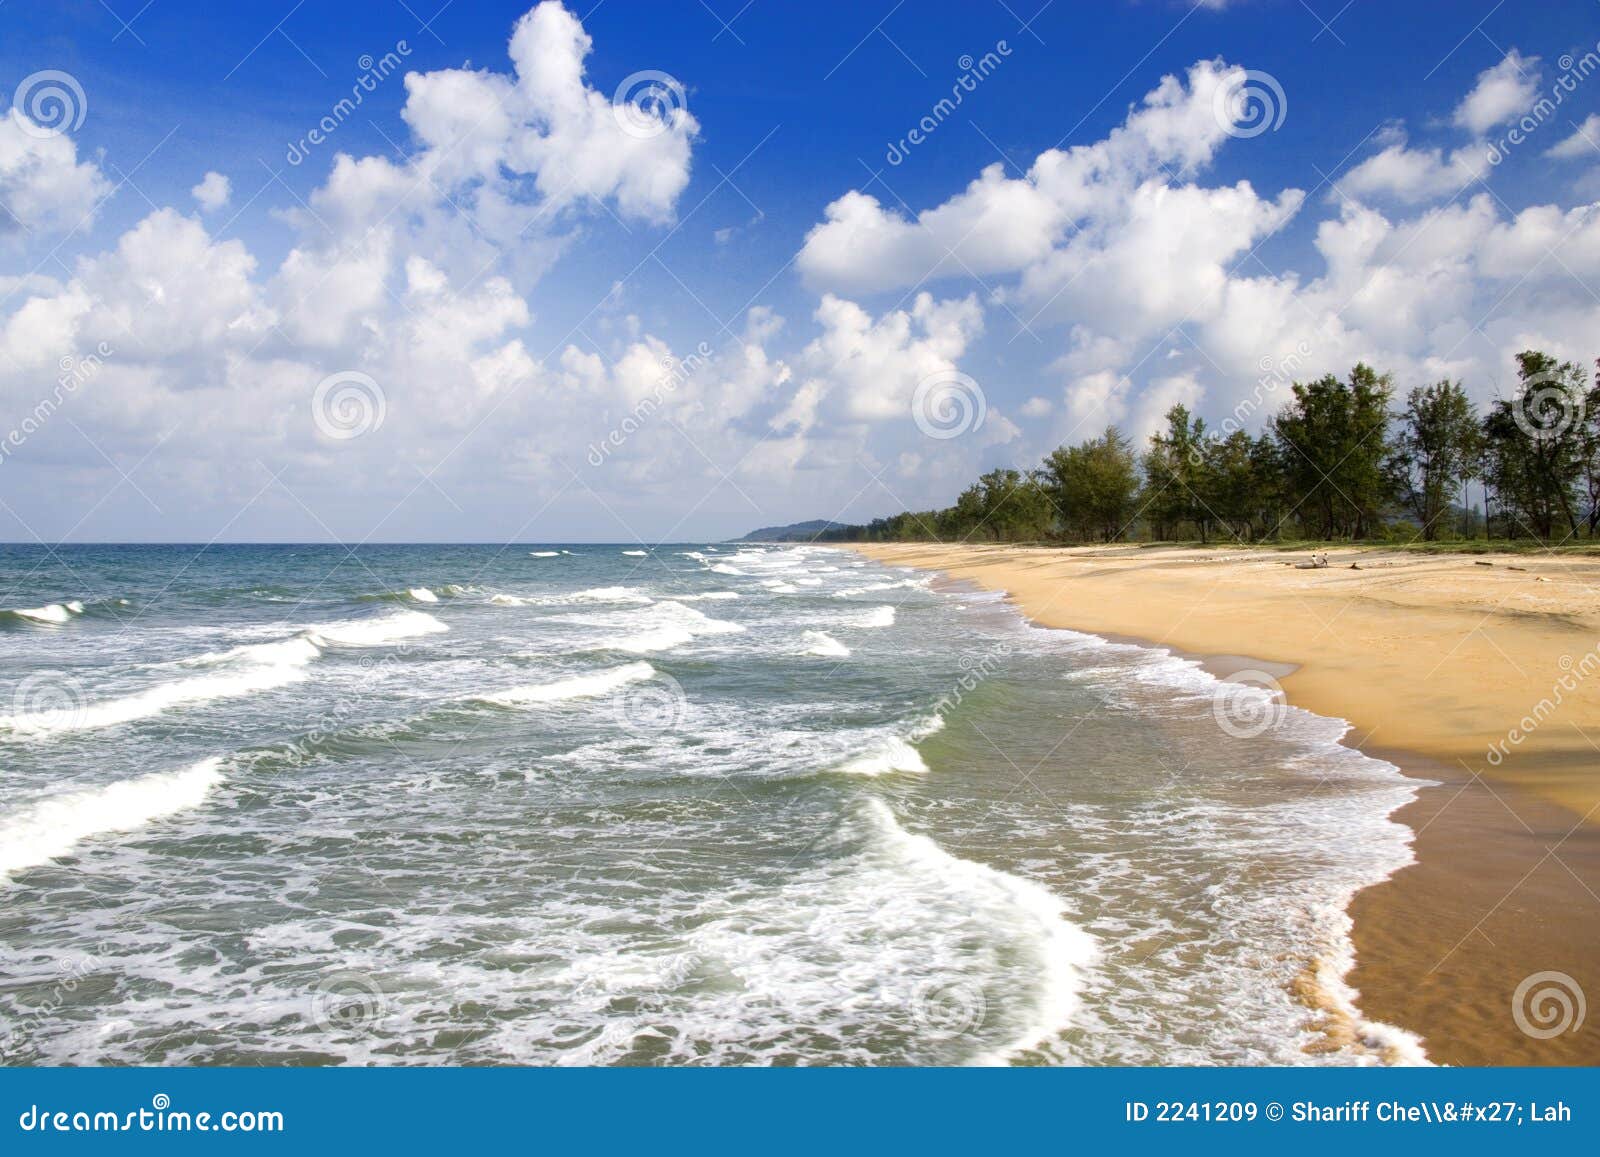 terengganu coastal beach